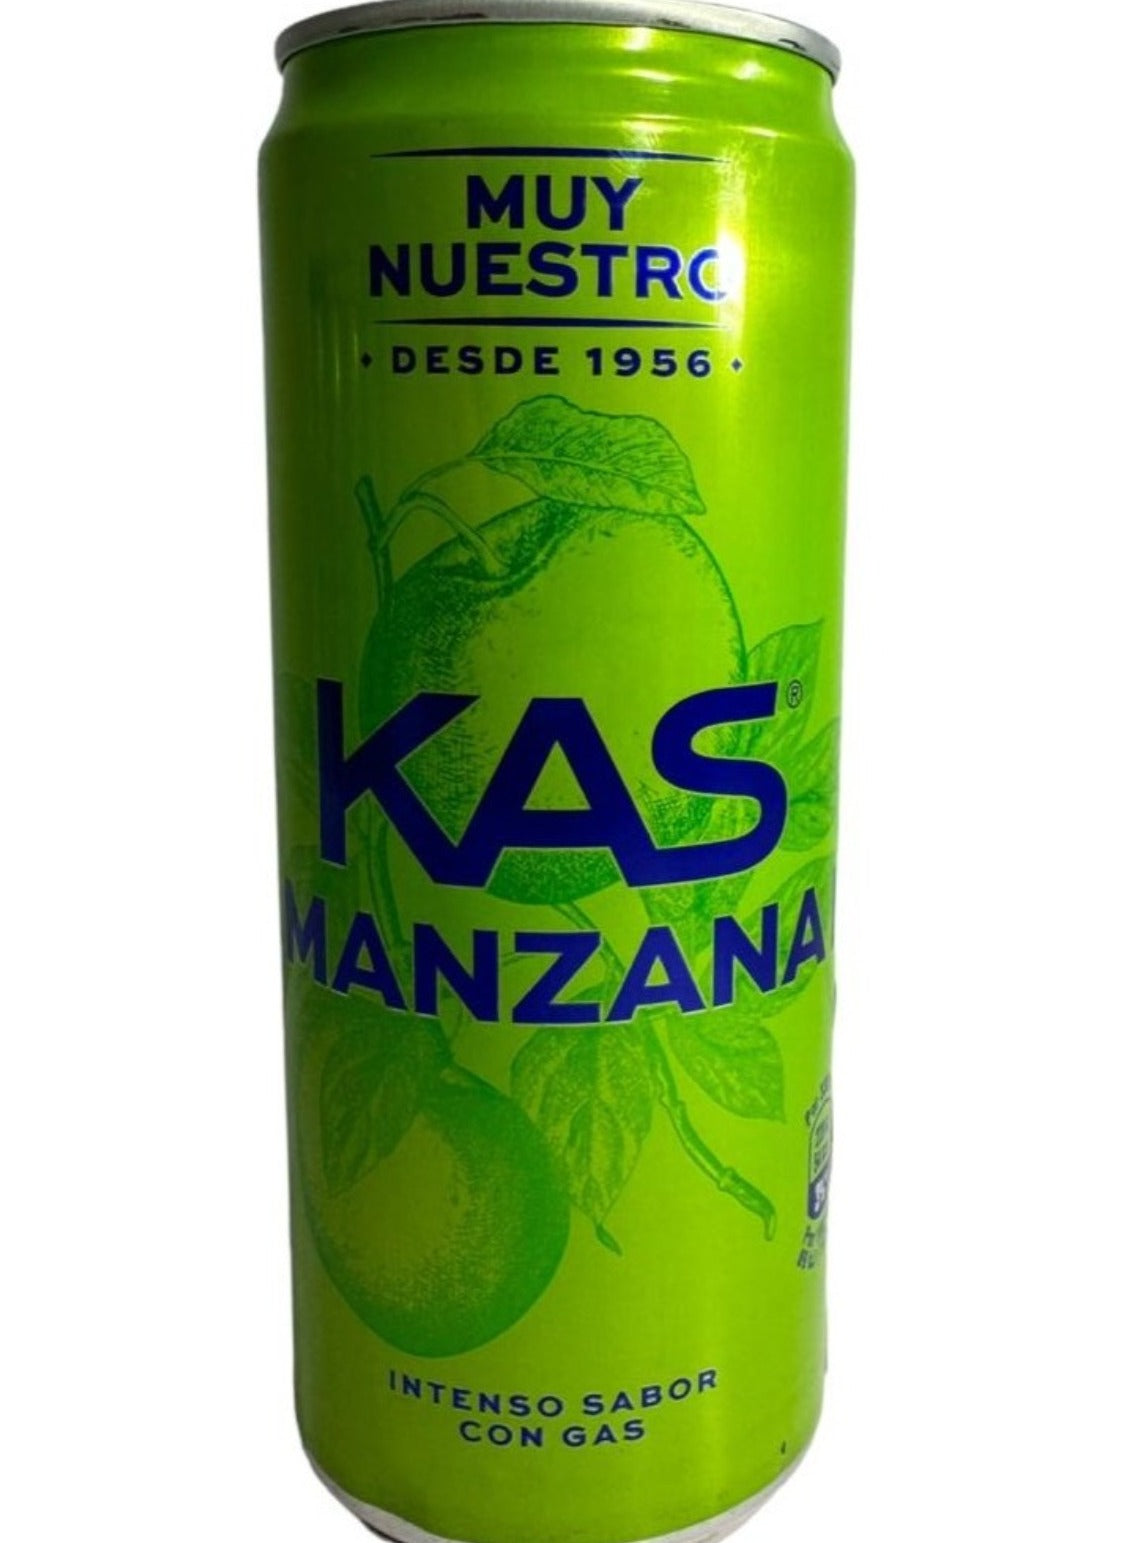 Muy Nuestro KAS Manzana Spanish - Apple soft drink 330ml